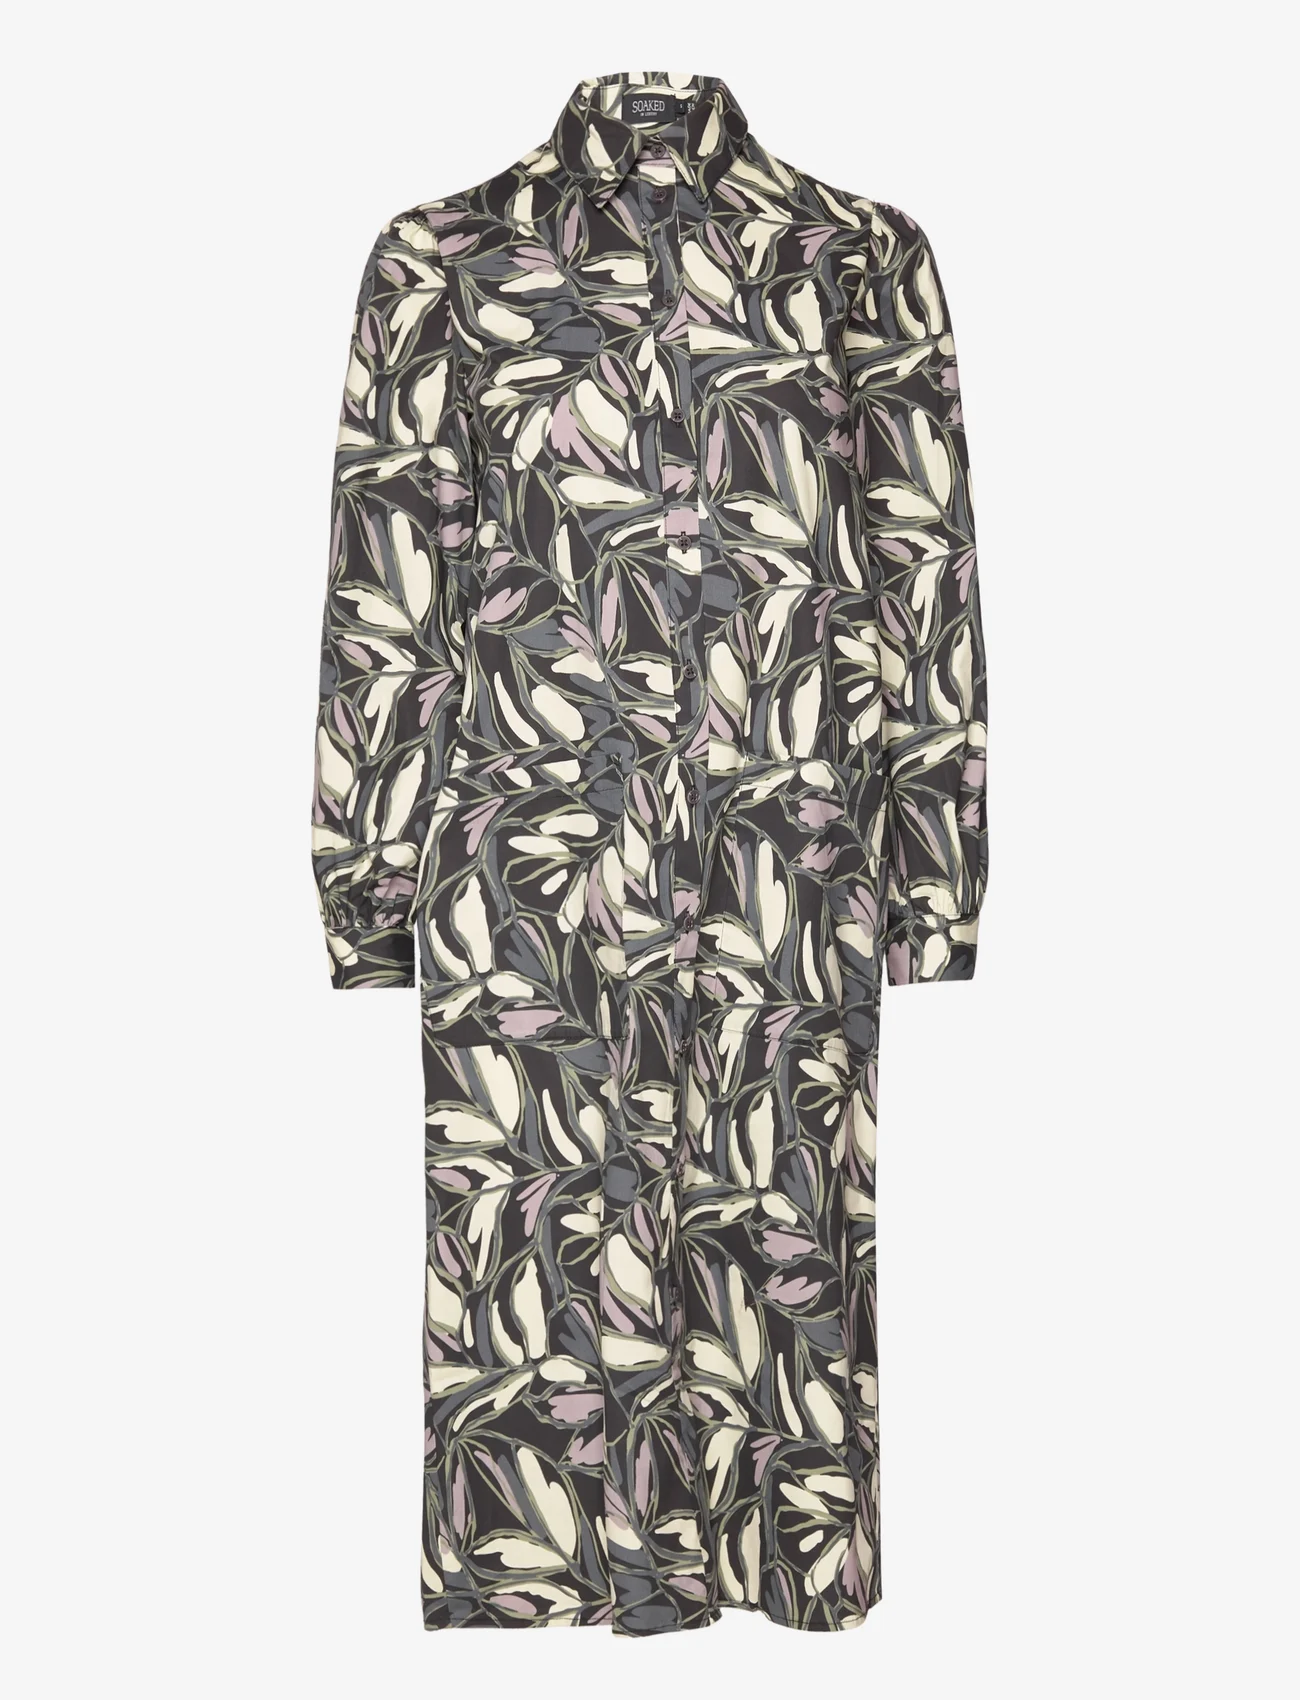 Soaked in Luxury - SLFrankie Shirt Dress - hemdkleider - black leaf print - 0